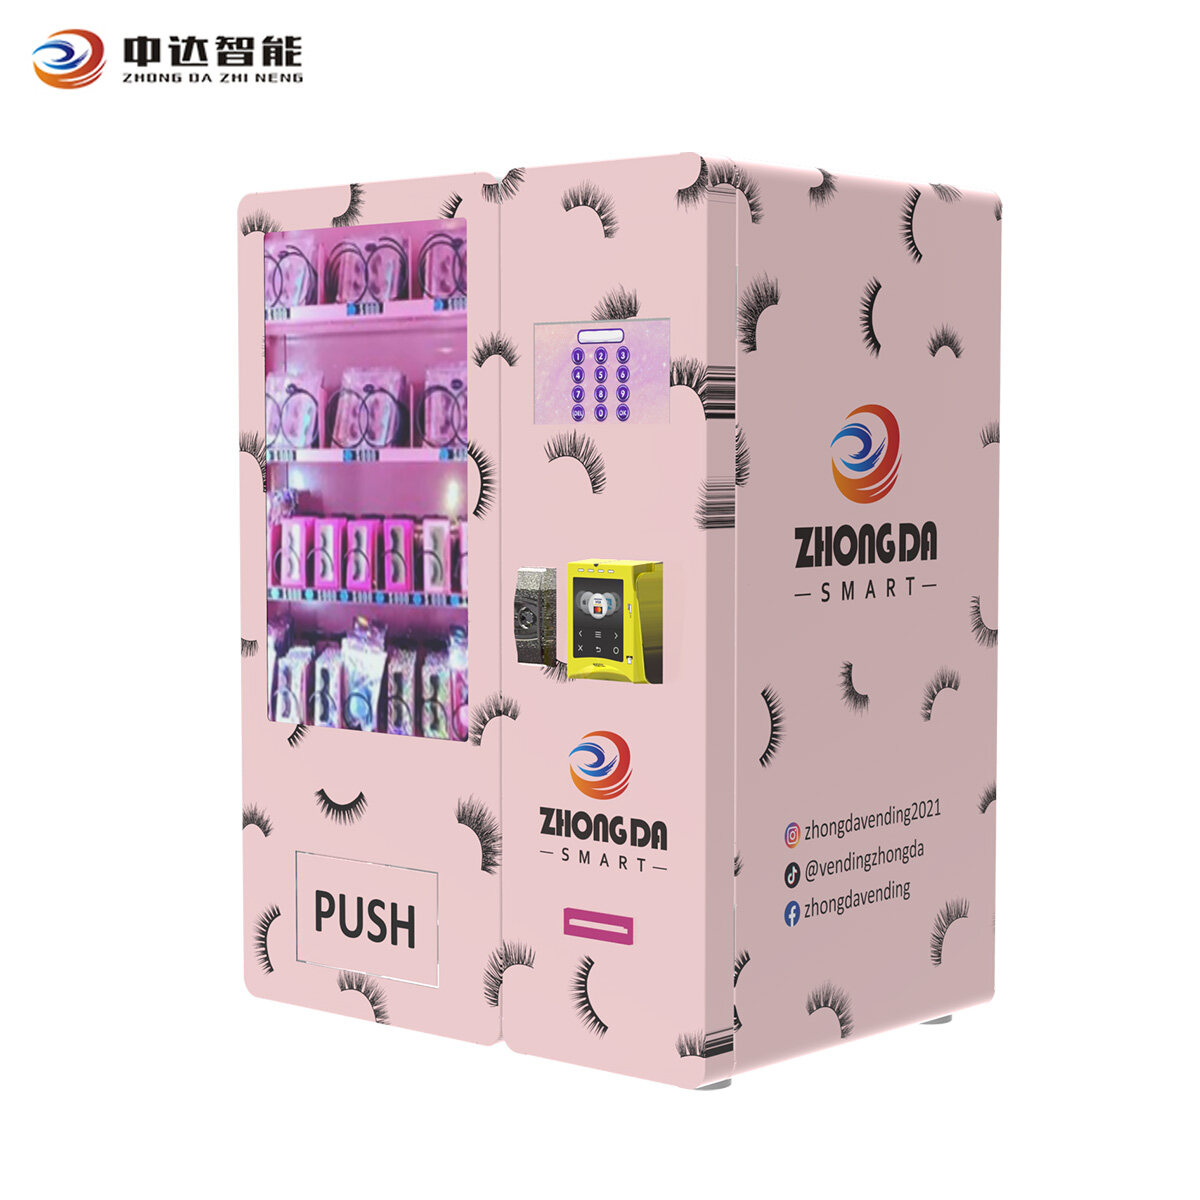 Wholesale led screen vending machine,small vending machine company OEM,small wall mounted vending machines ODM,Cheap wall mounted mini vending machine